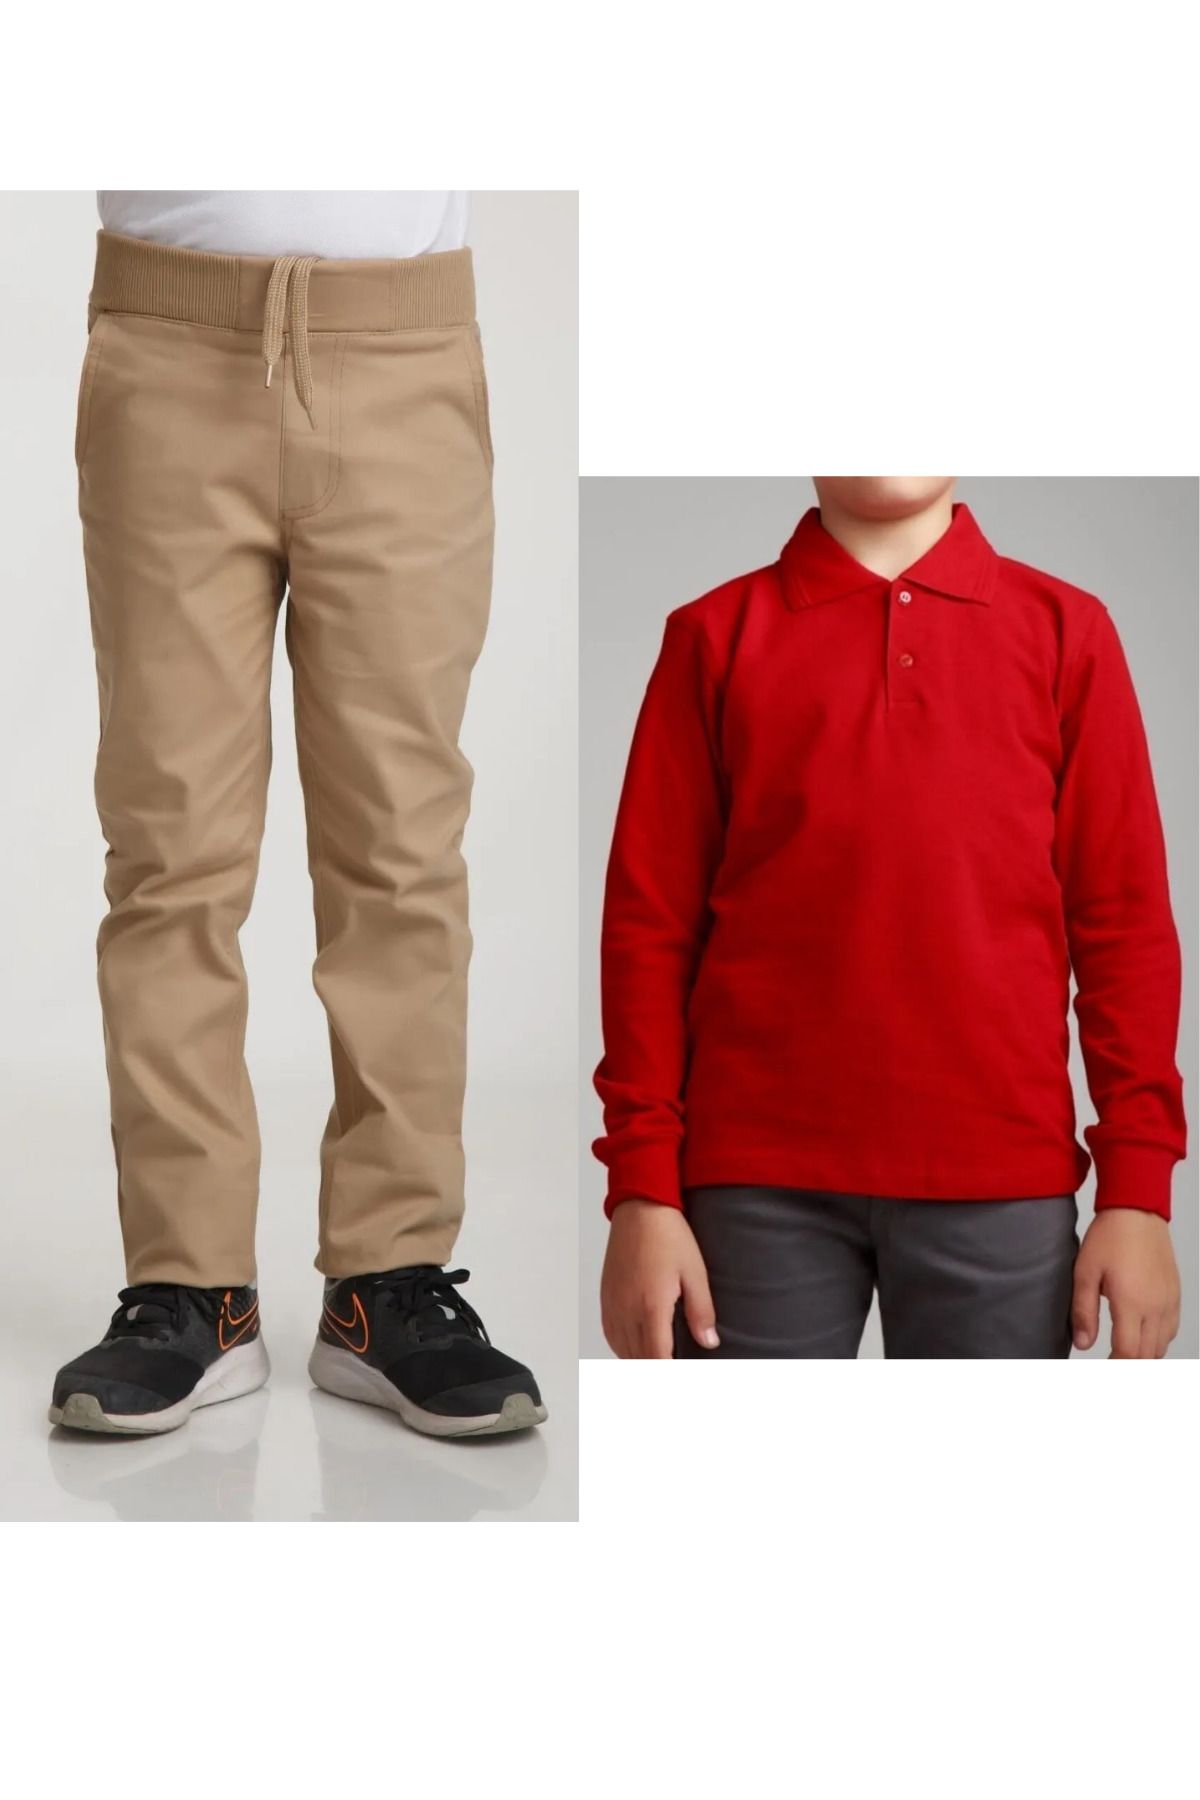 Nacar Unisex Çocuk Ribana Bel Keten Bej Okul Pantolonu + Polo Yaka Uzun Kol T-shirt